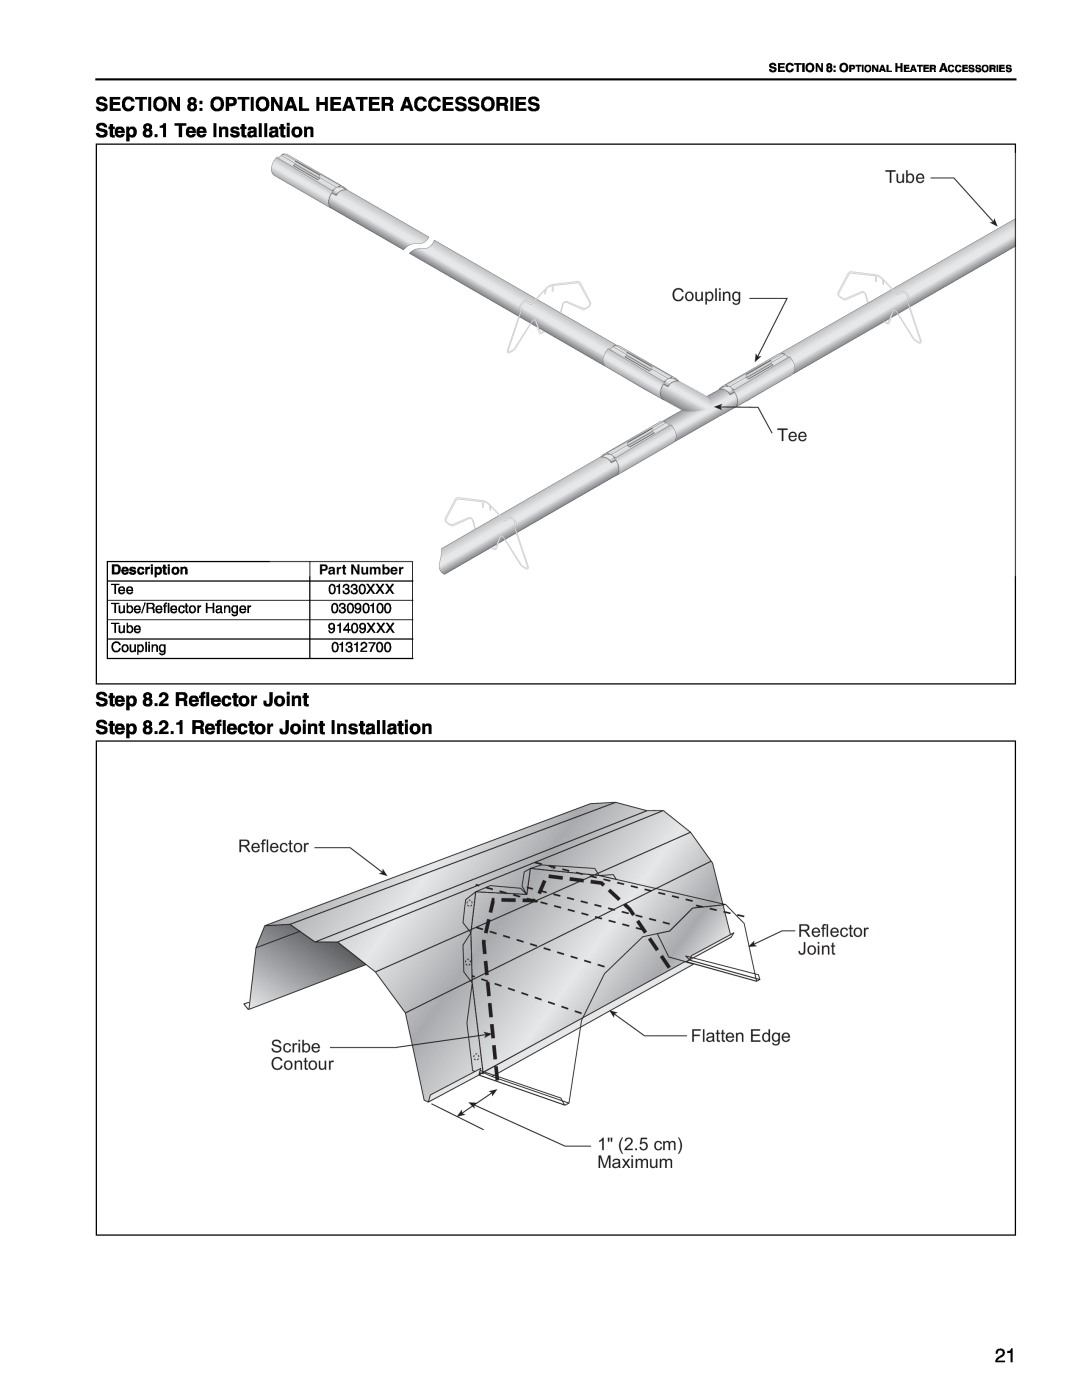 Roberts Gorden CRV-B-6 Optional Heater Accessories, 1 Tee Installation, 2 Reflector Joint, Description, Part Number 